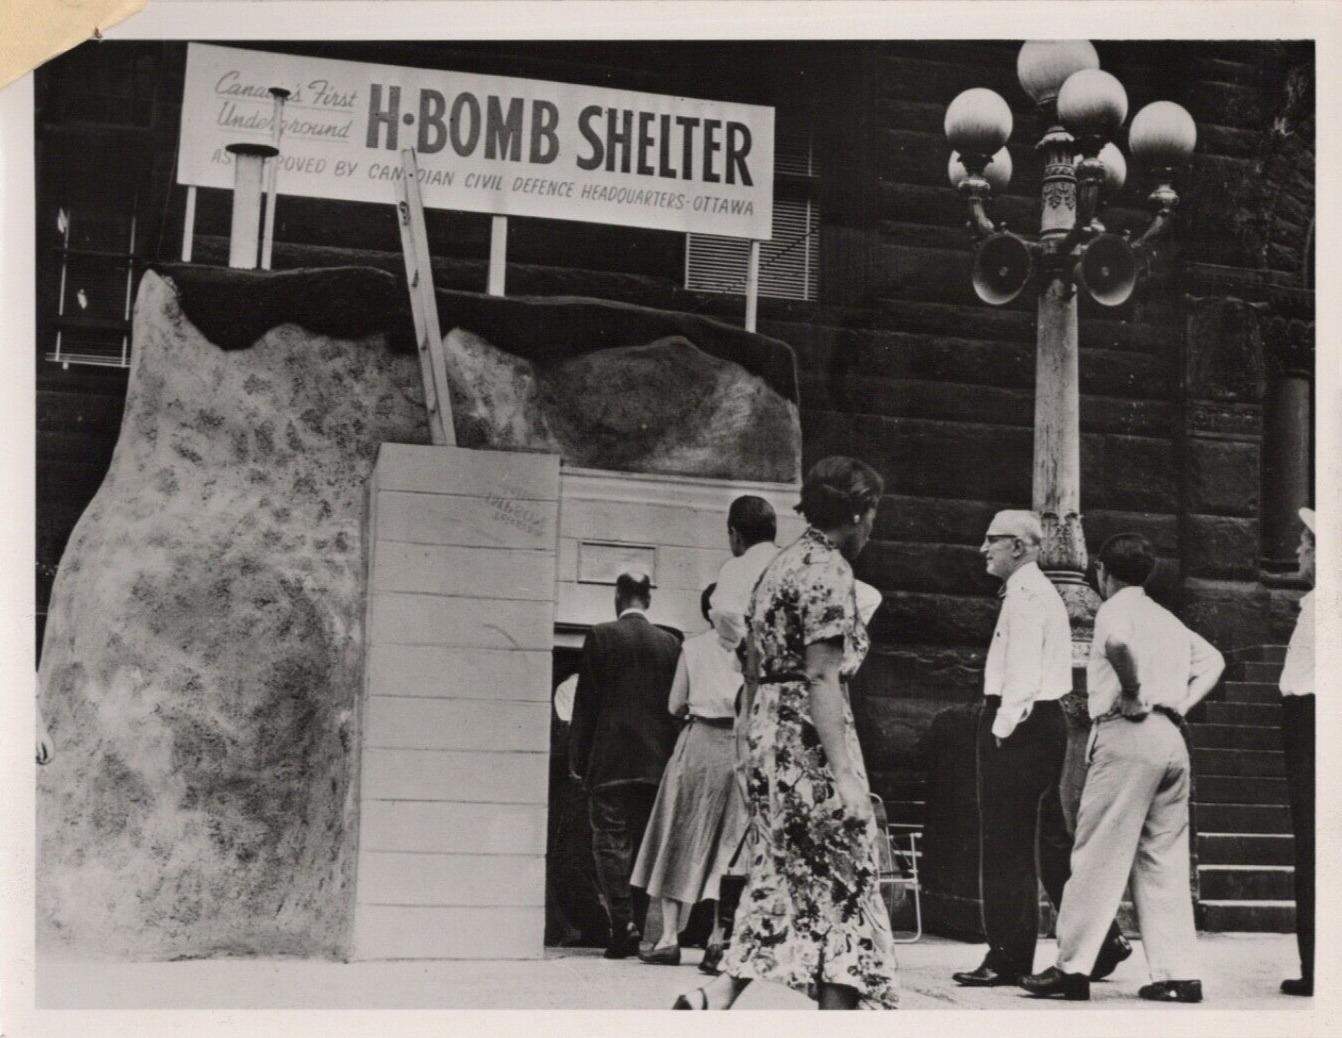 Original 1955 Press Photo of H-Bomb Shelter Premier In Toronto